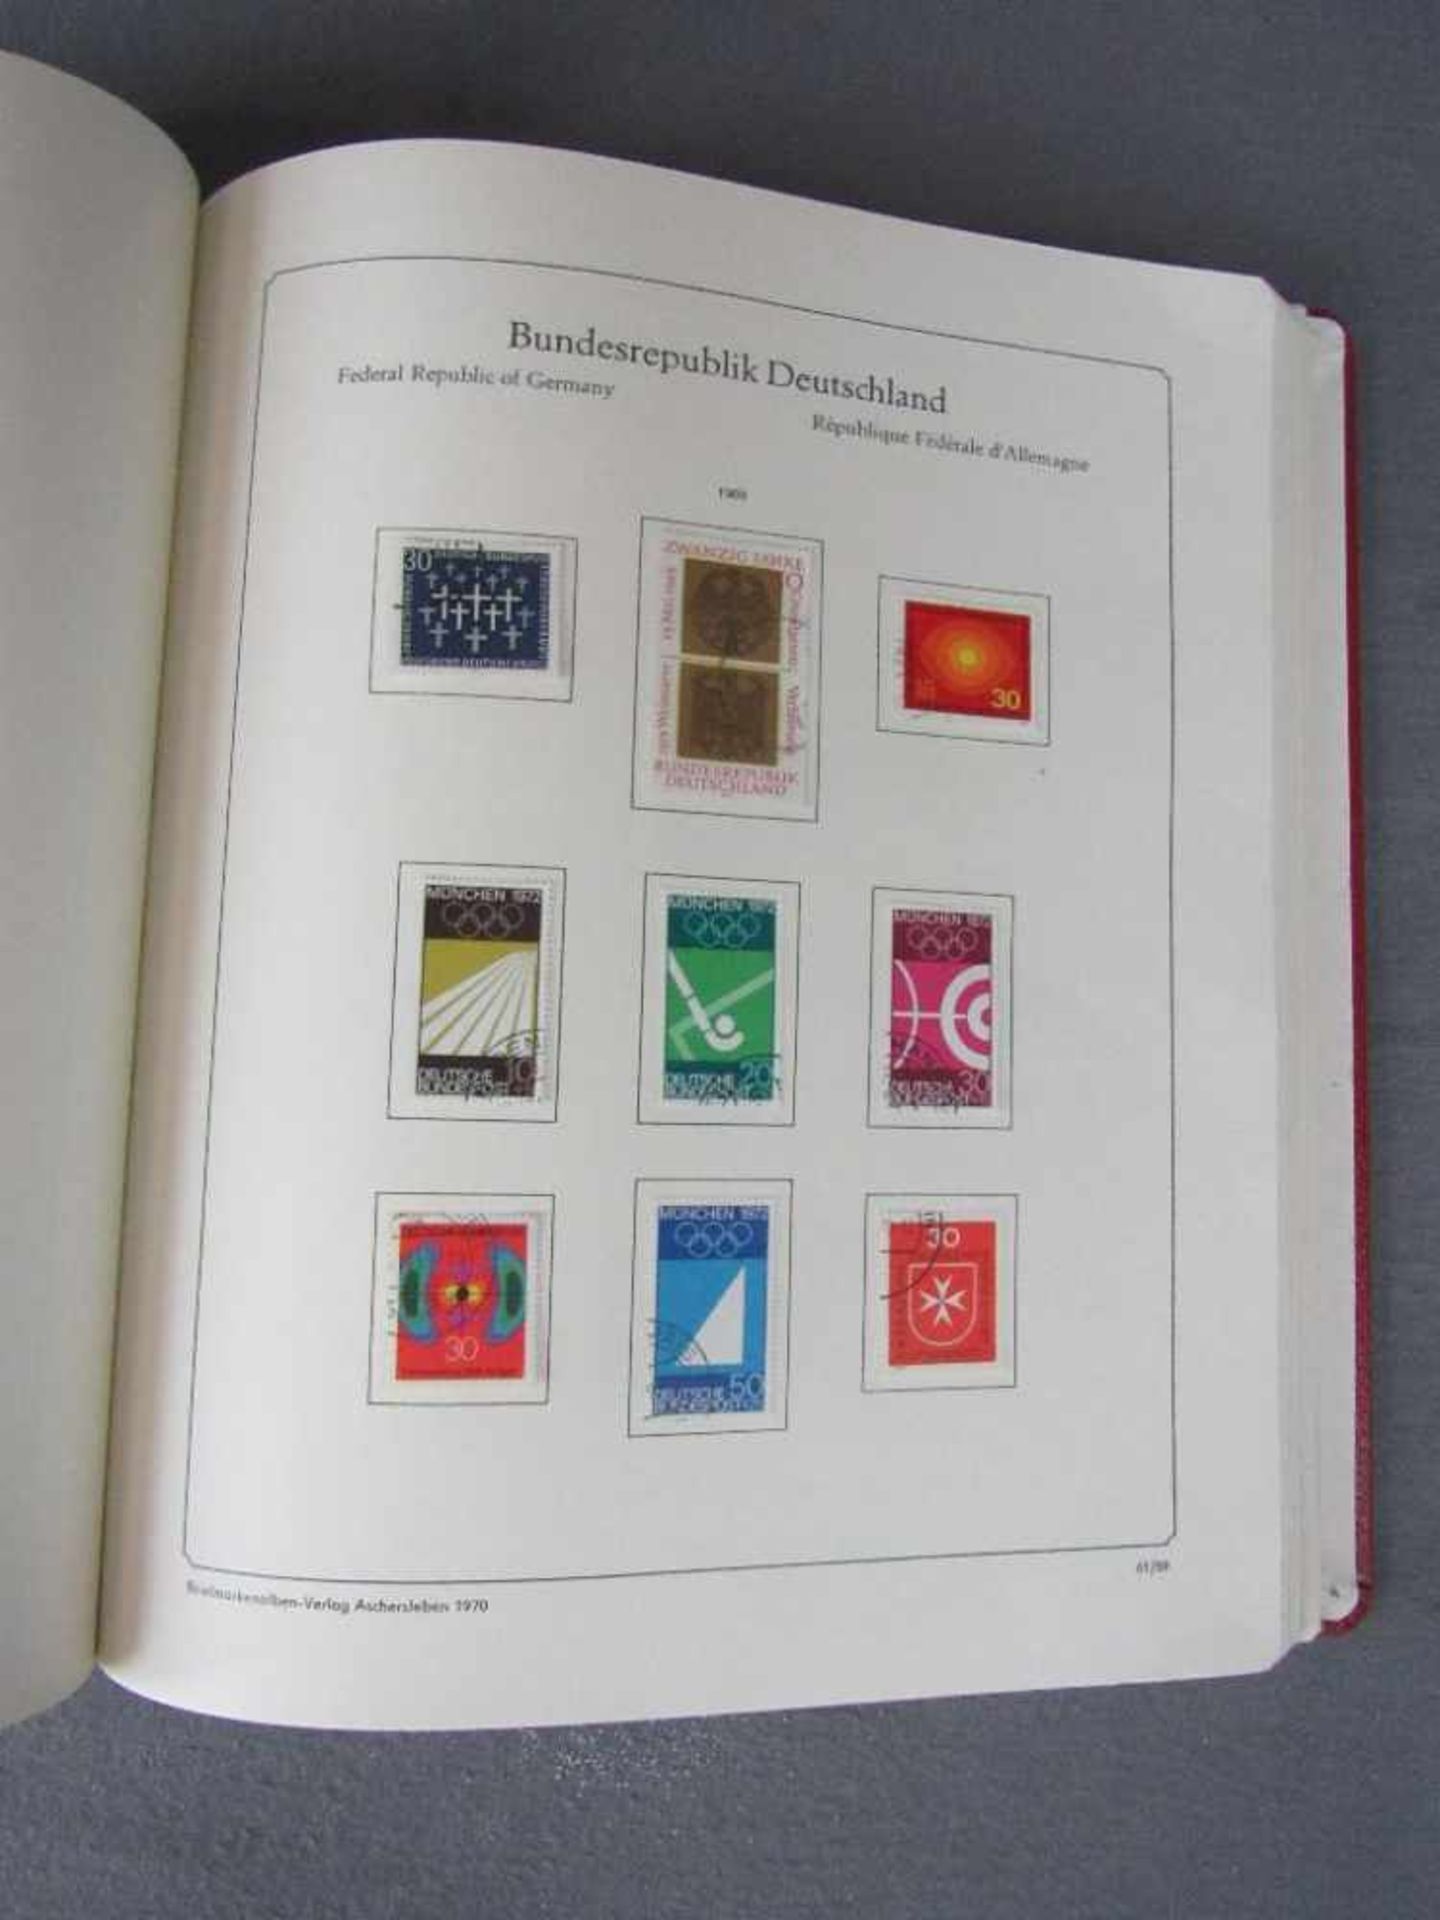 BRD 1952 - 1984 Gestempelt, auch alle Blöcke sauberes Vordruckalbum - Image 2 of 4